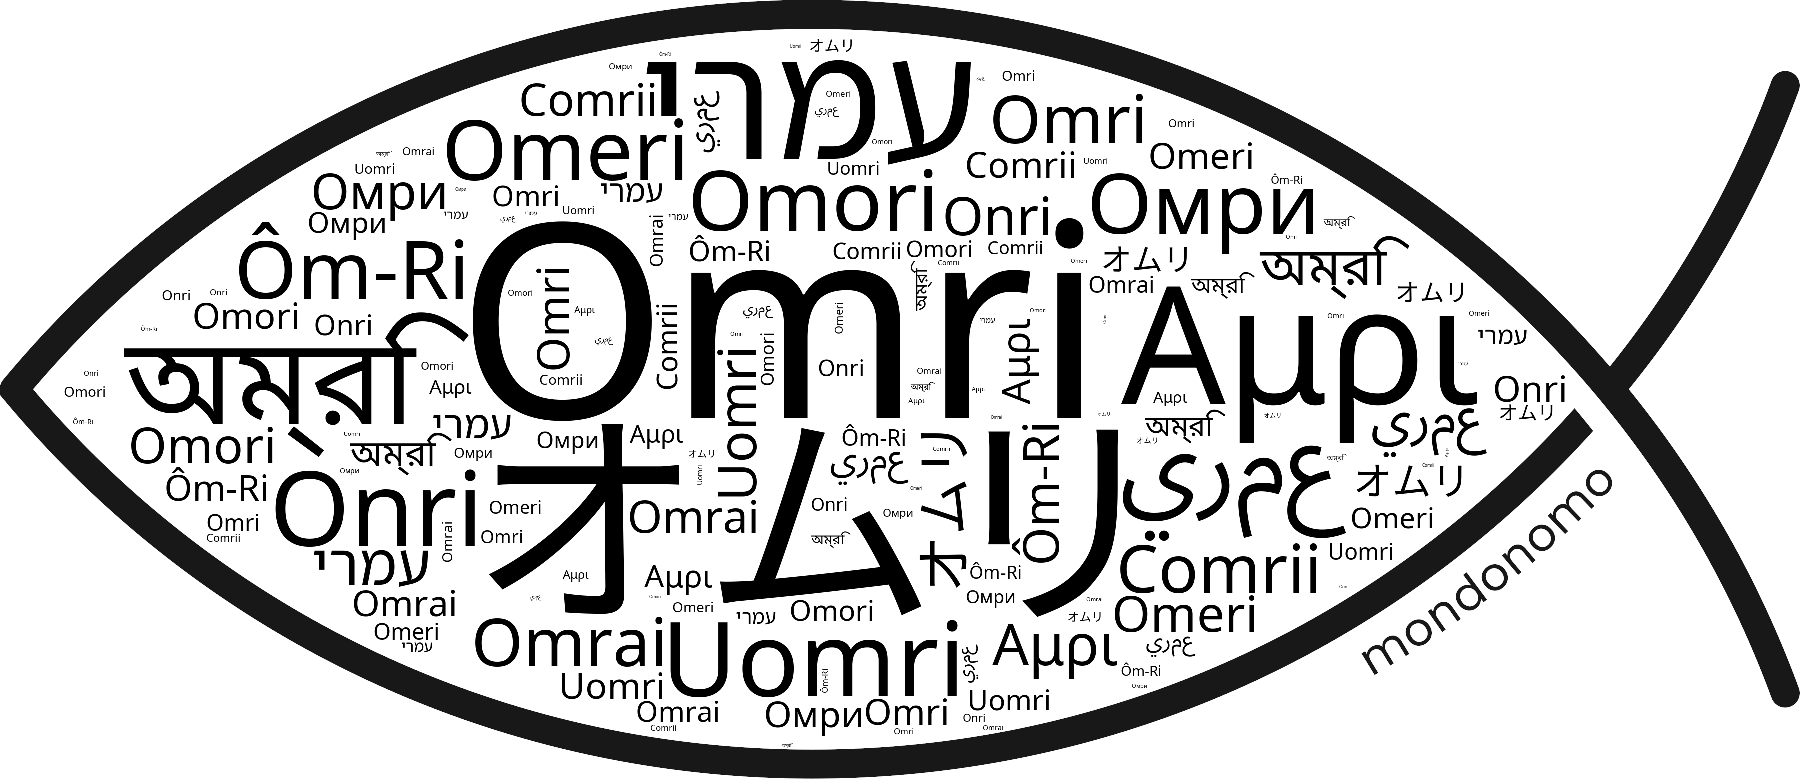 Name Omri in the world's Bibles